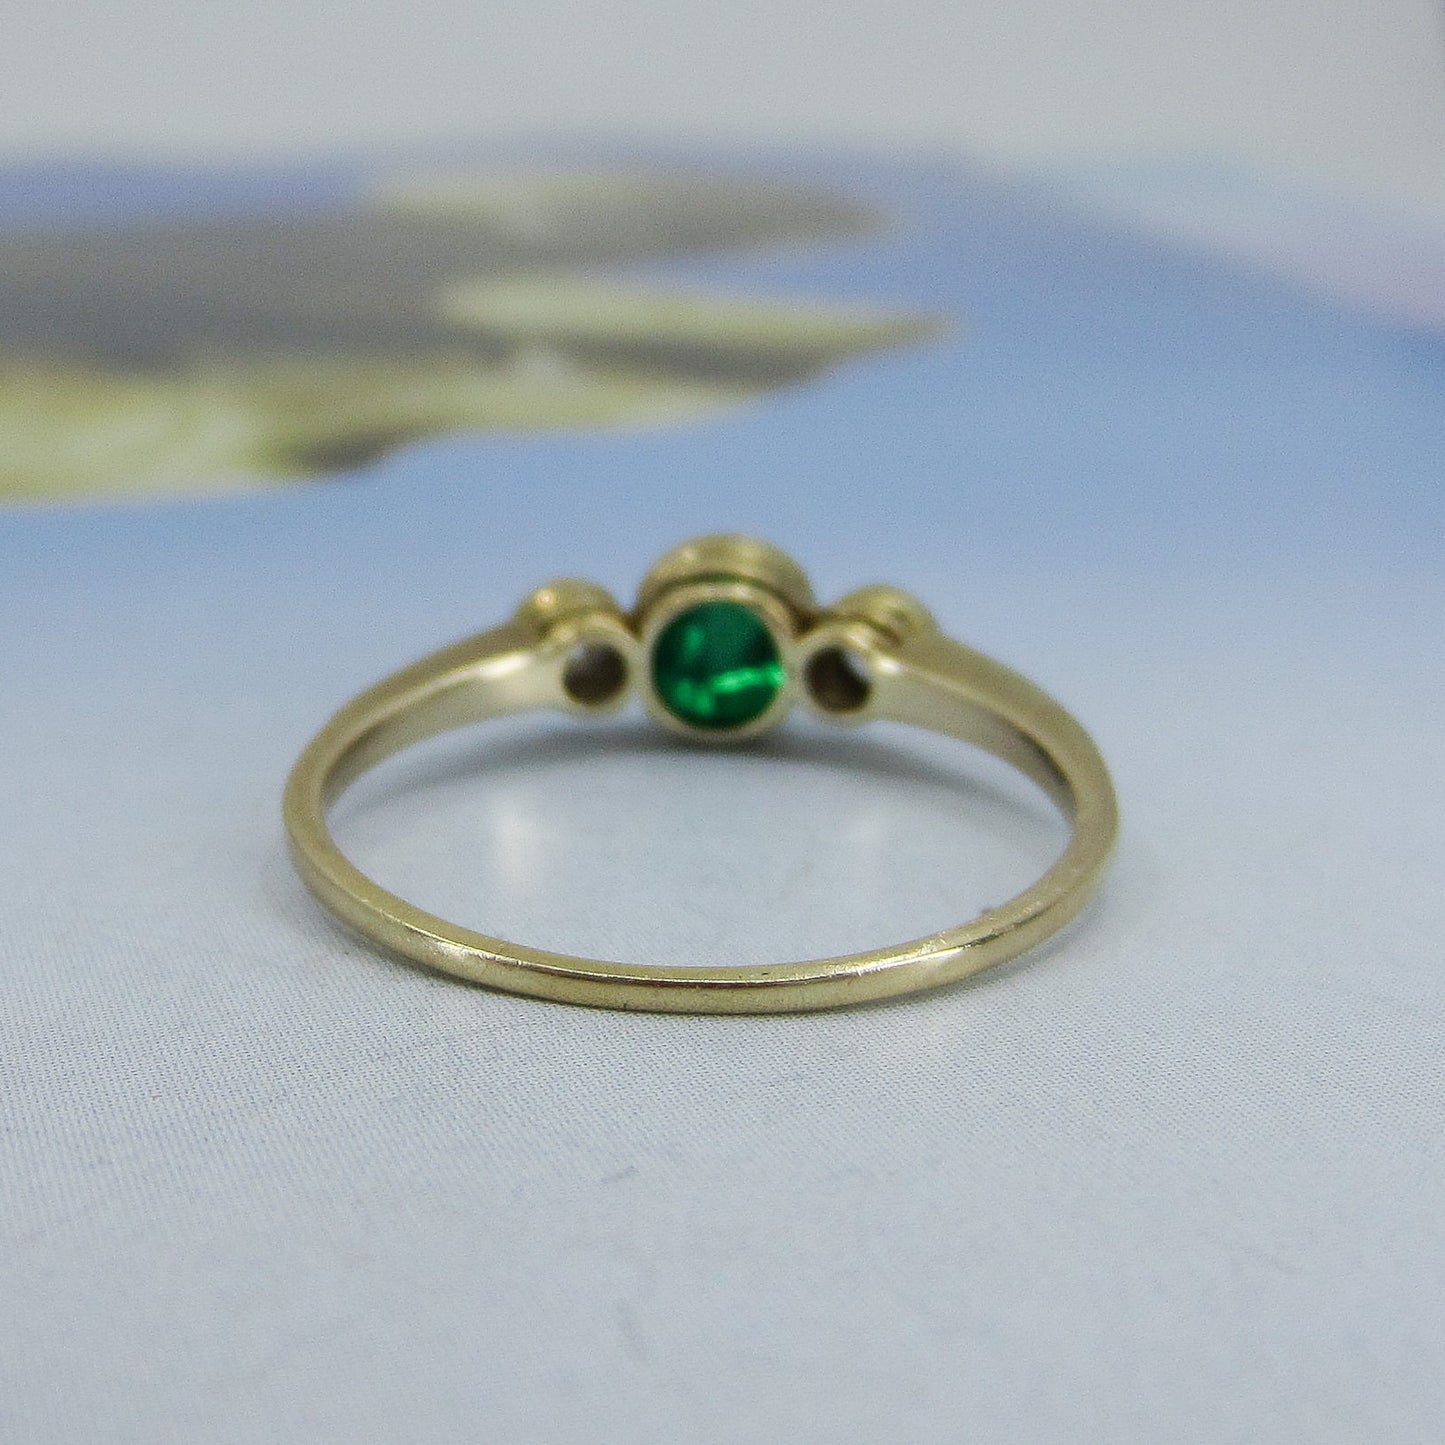 SOLD-Art Deco Cabochon Emerald and Old Euro Diamond Ring Platinum/14k c. 1930